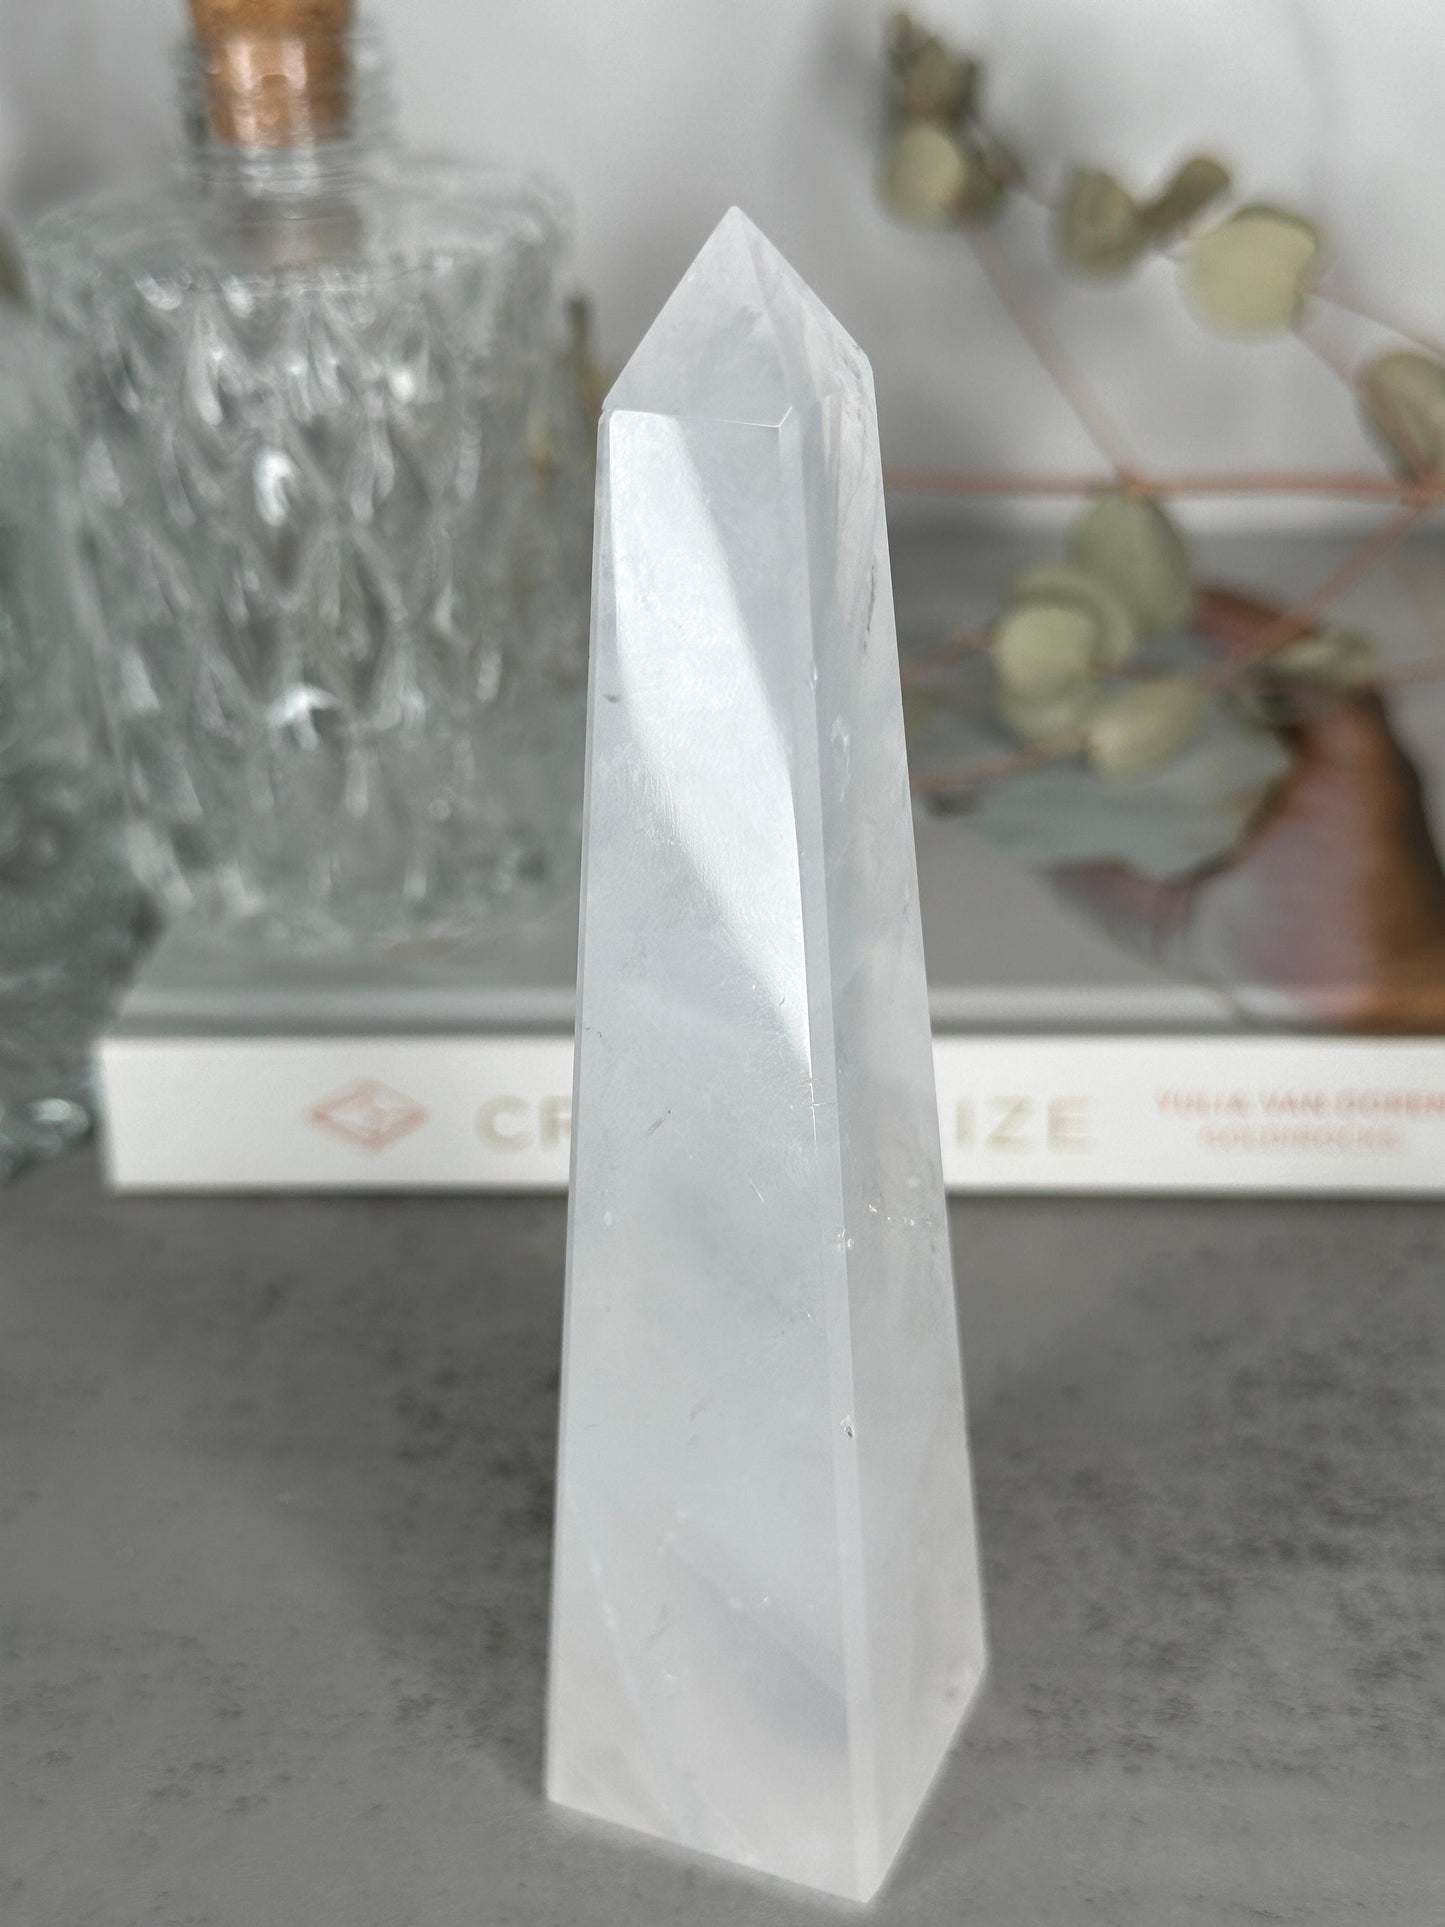 Gorgeous Milky Girasol Quartz Obelisk | From Brazil | Quartz Point | Polished Crystal | Milky Hue